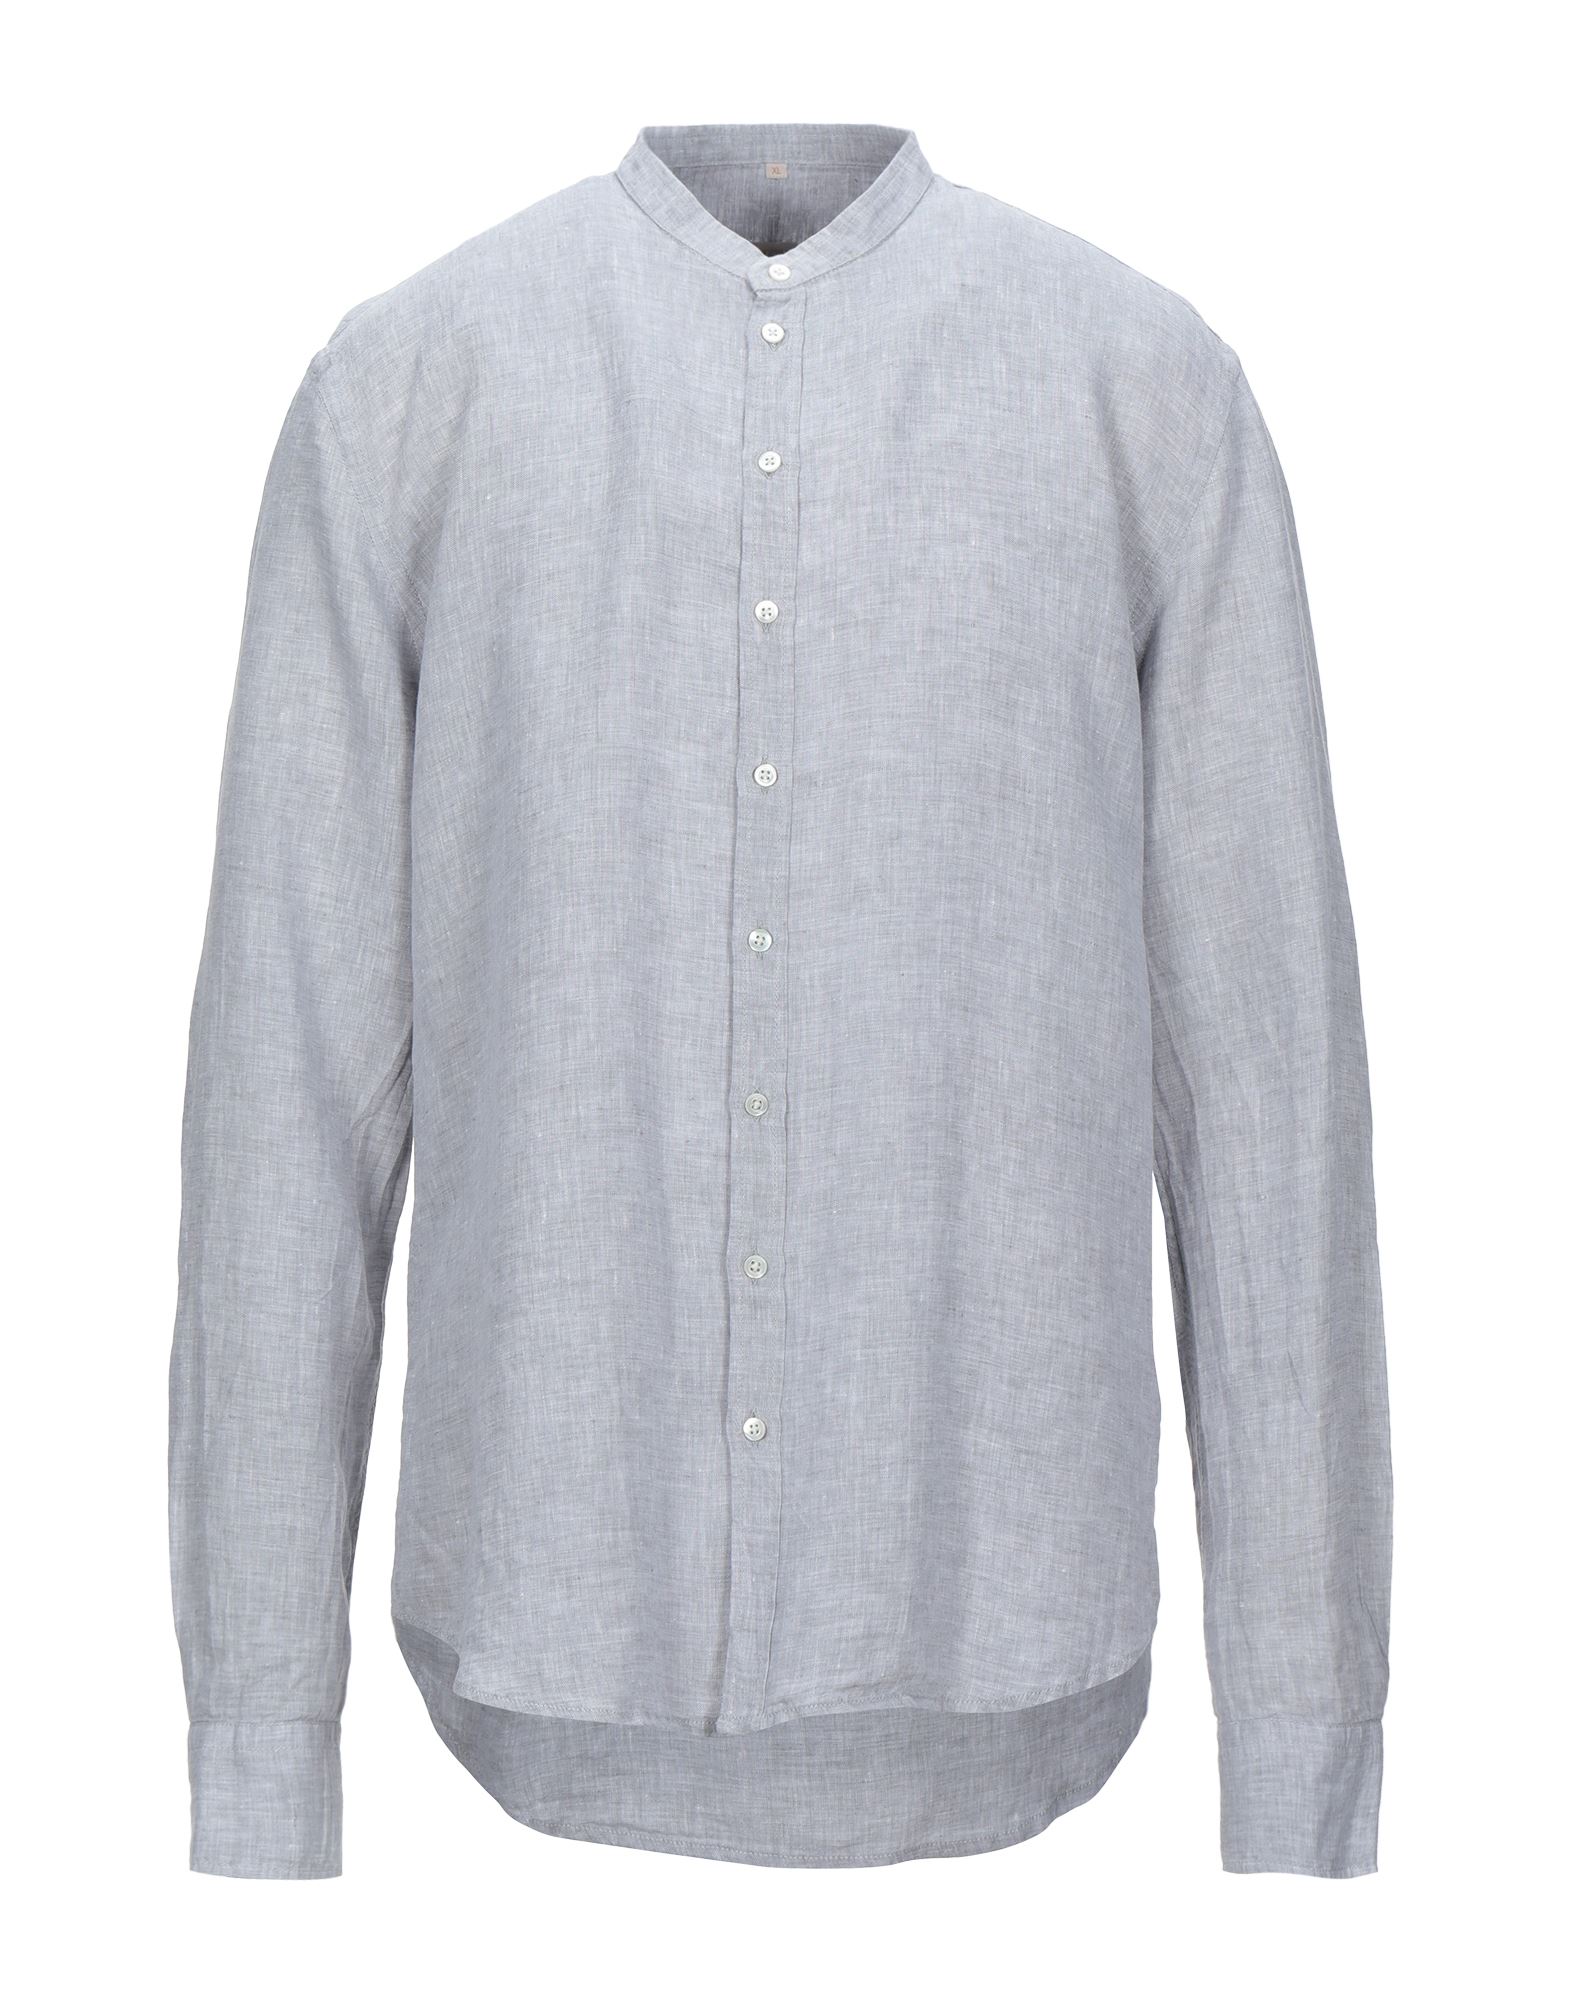 Q1 Shirts In Grey